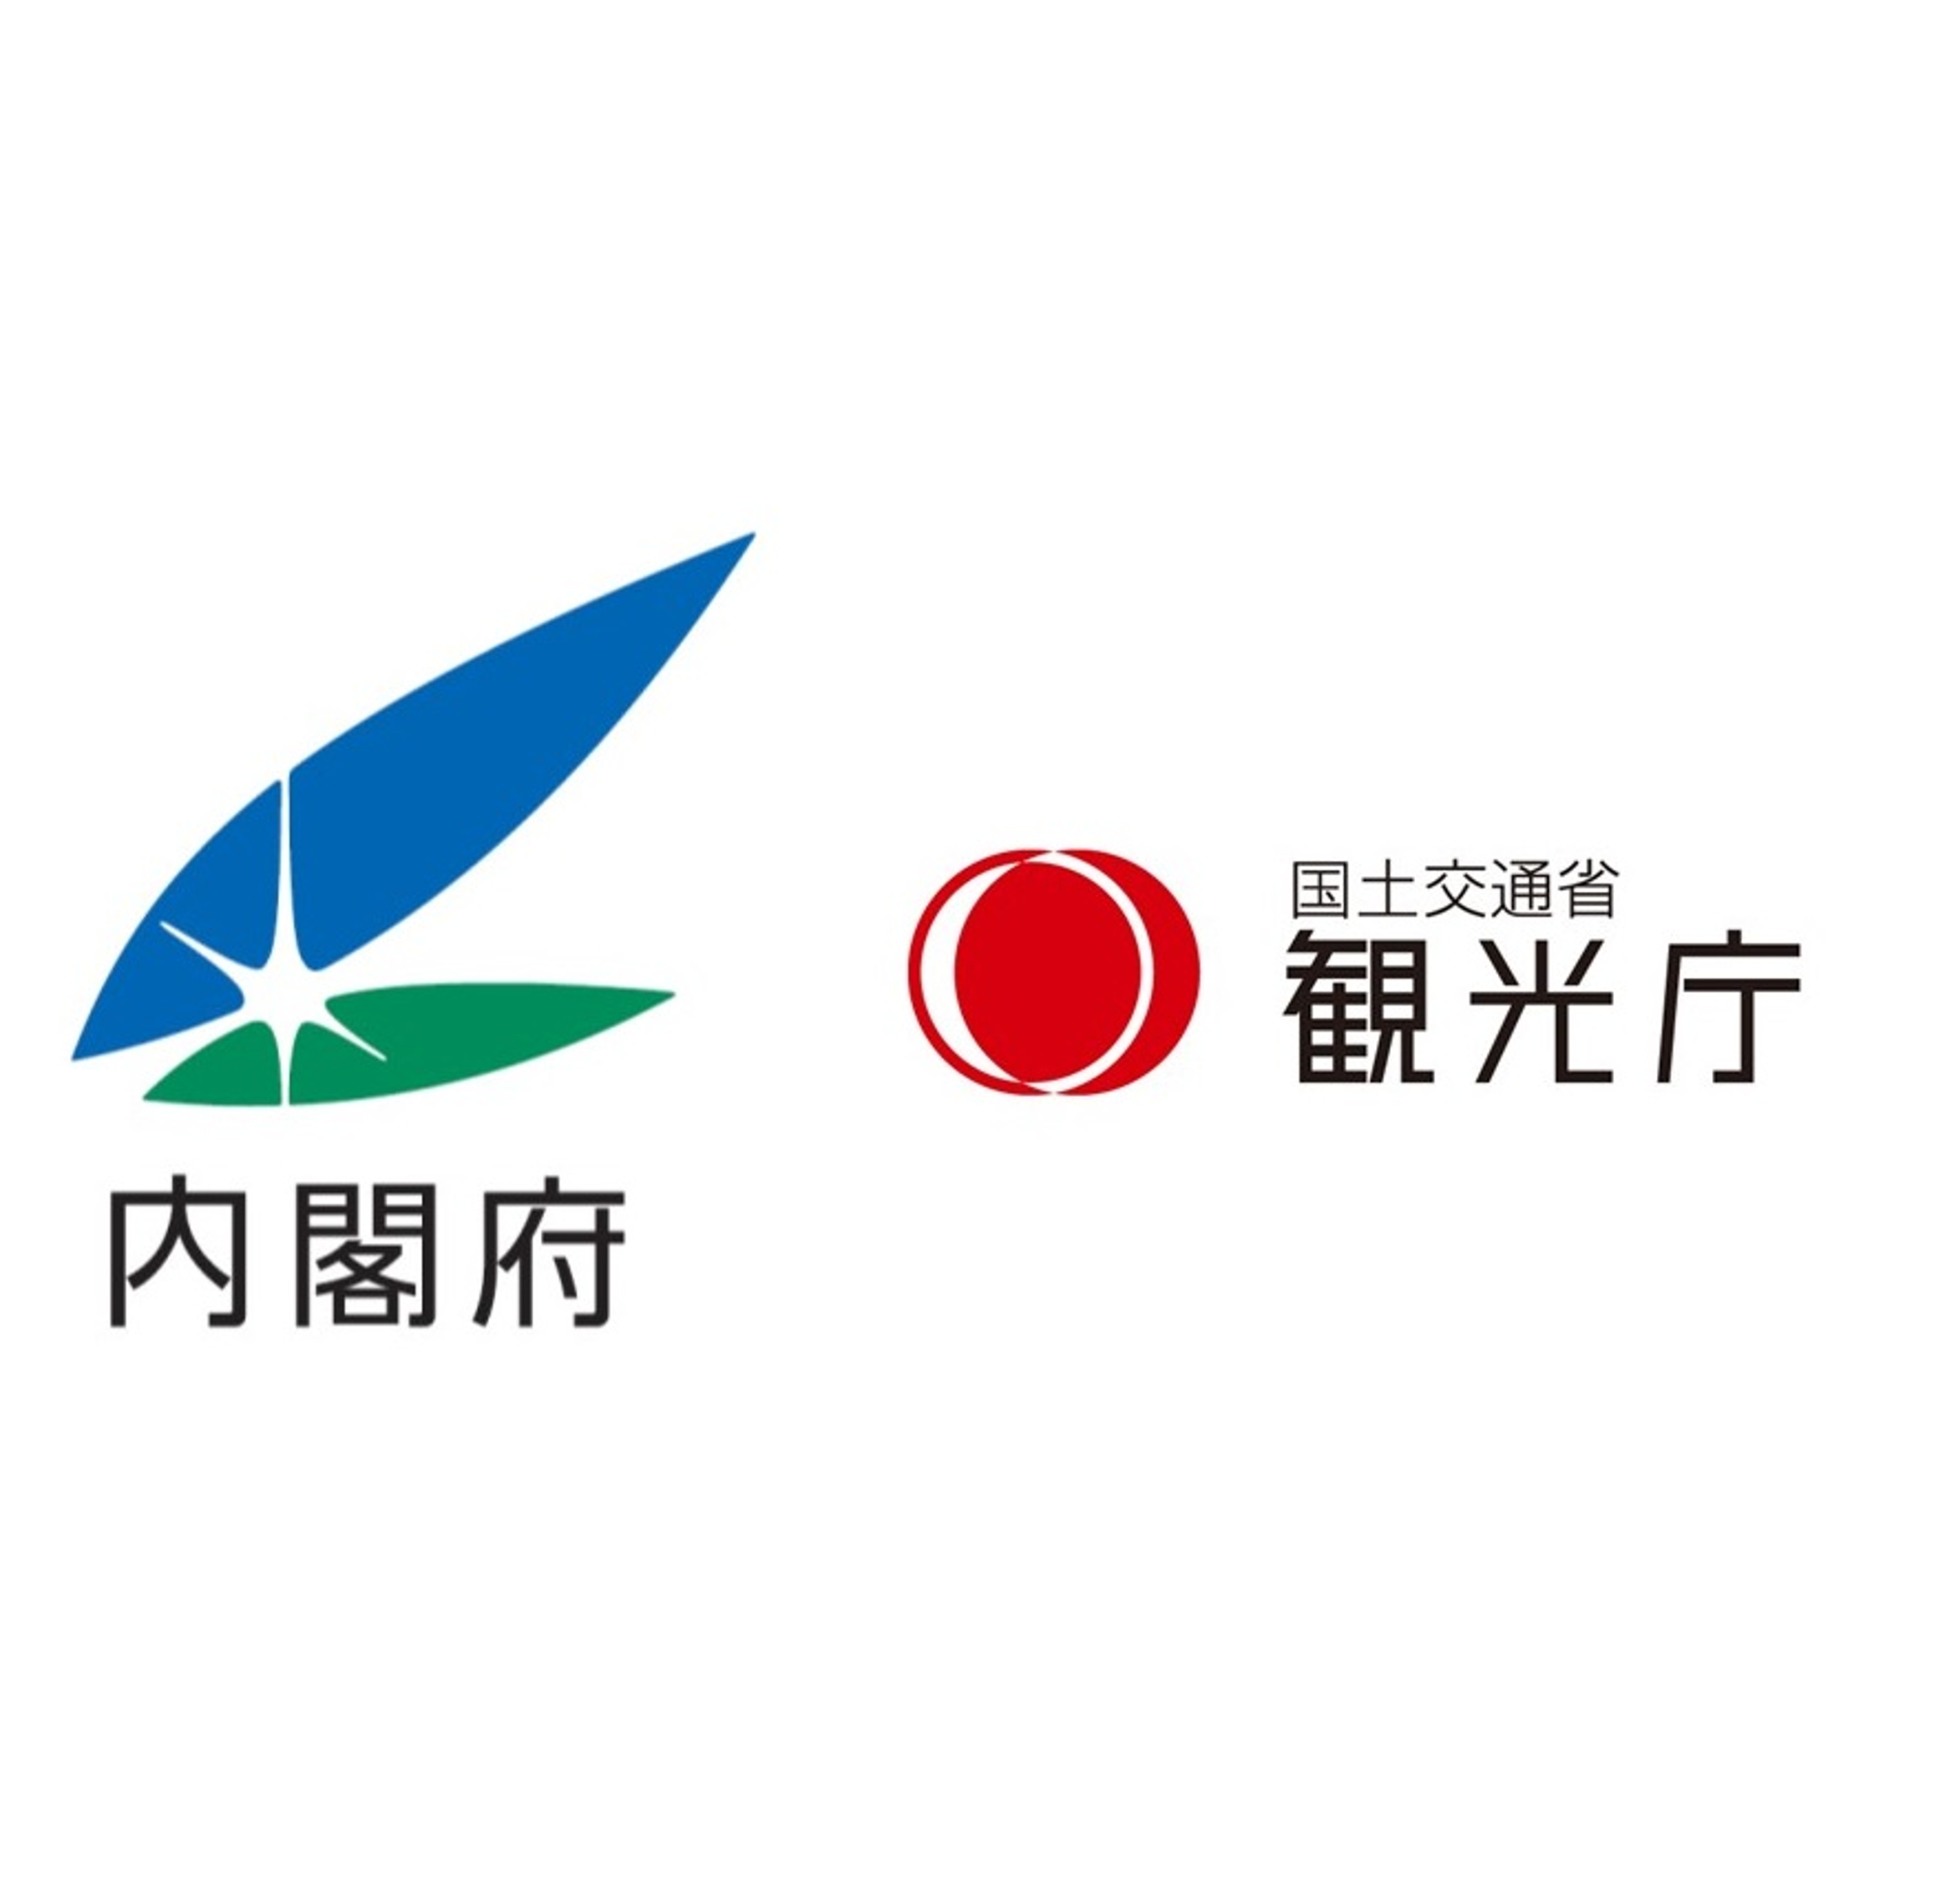 Disaster Management Bureau, Cabinet Office/Japan Tourism Agency